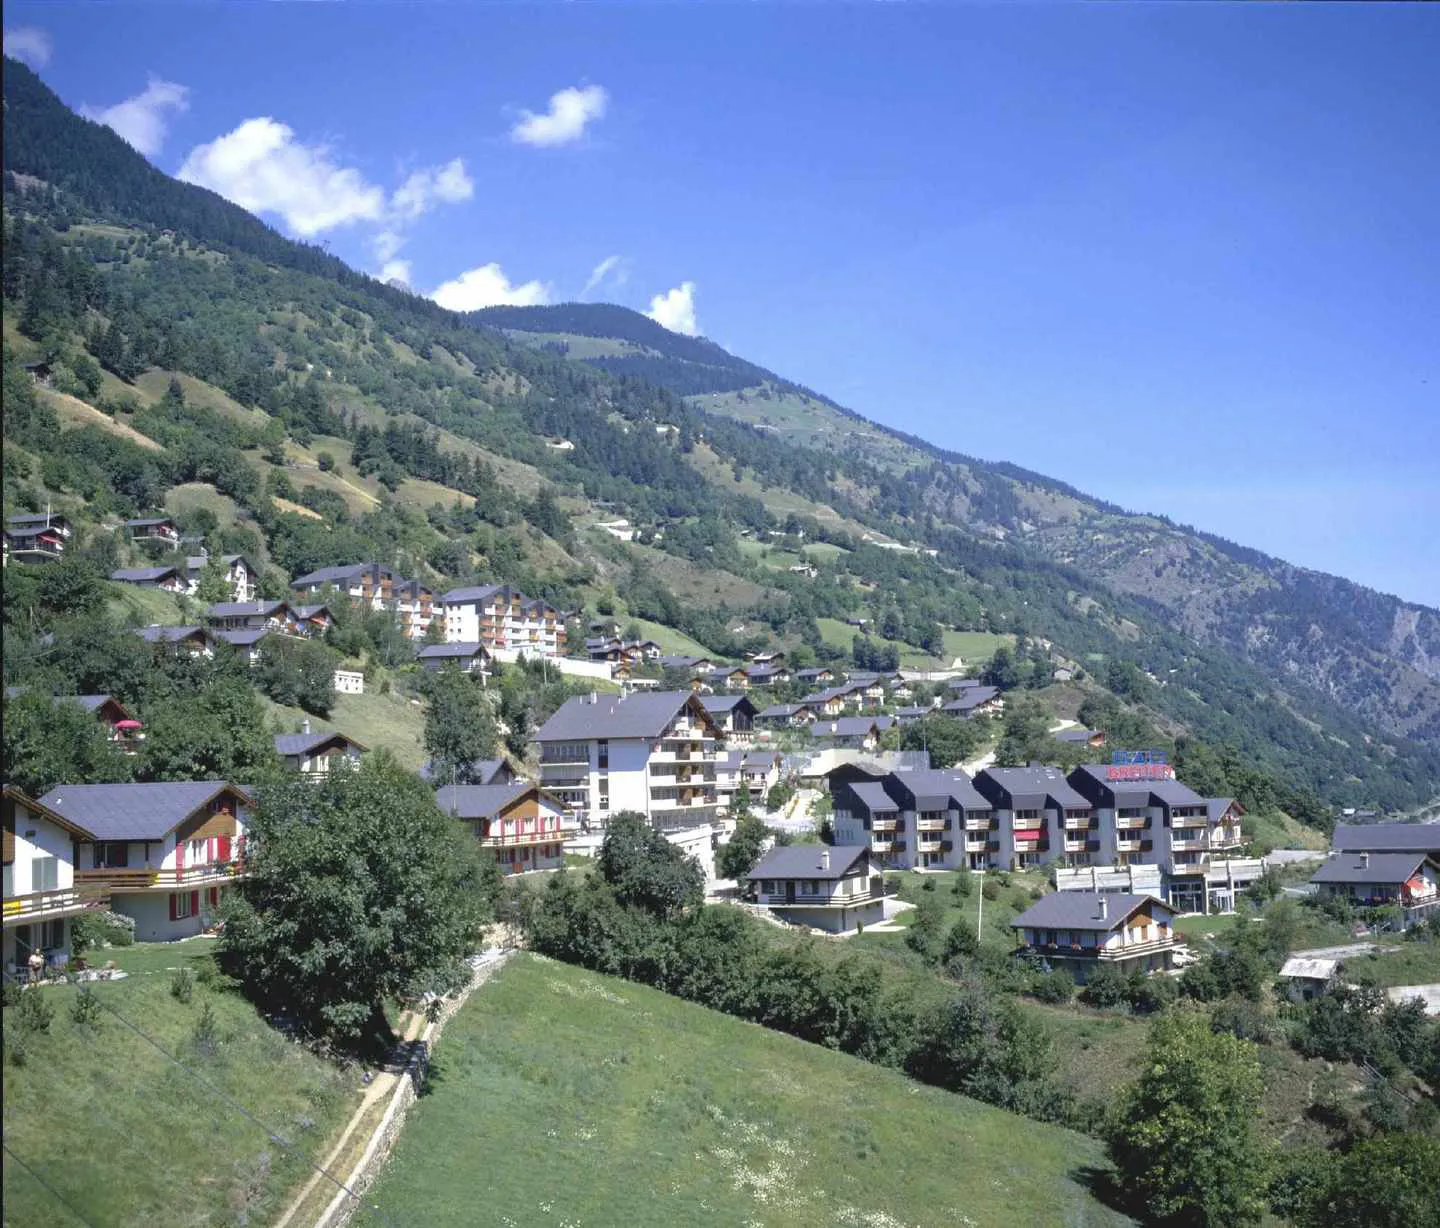 Hiking in the UNESCO World Heritage Swiss Alps